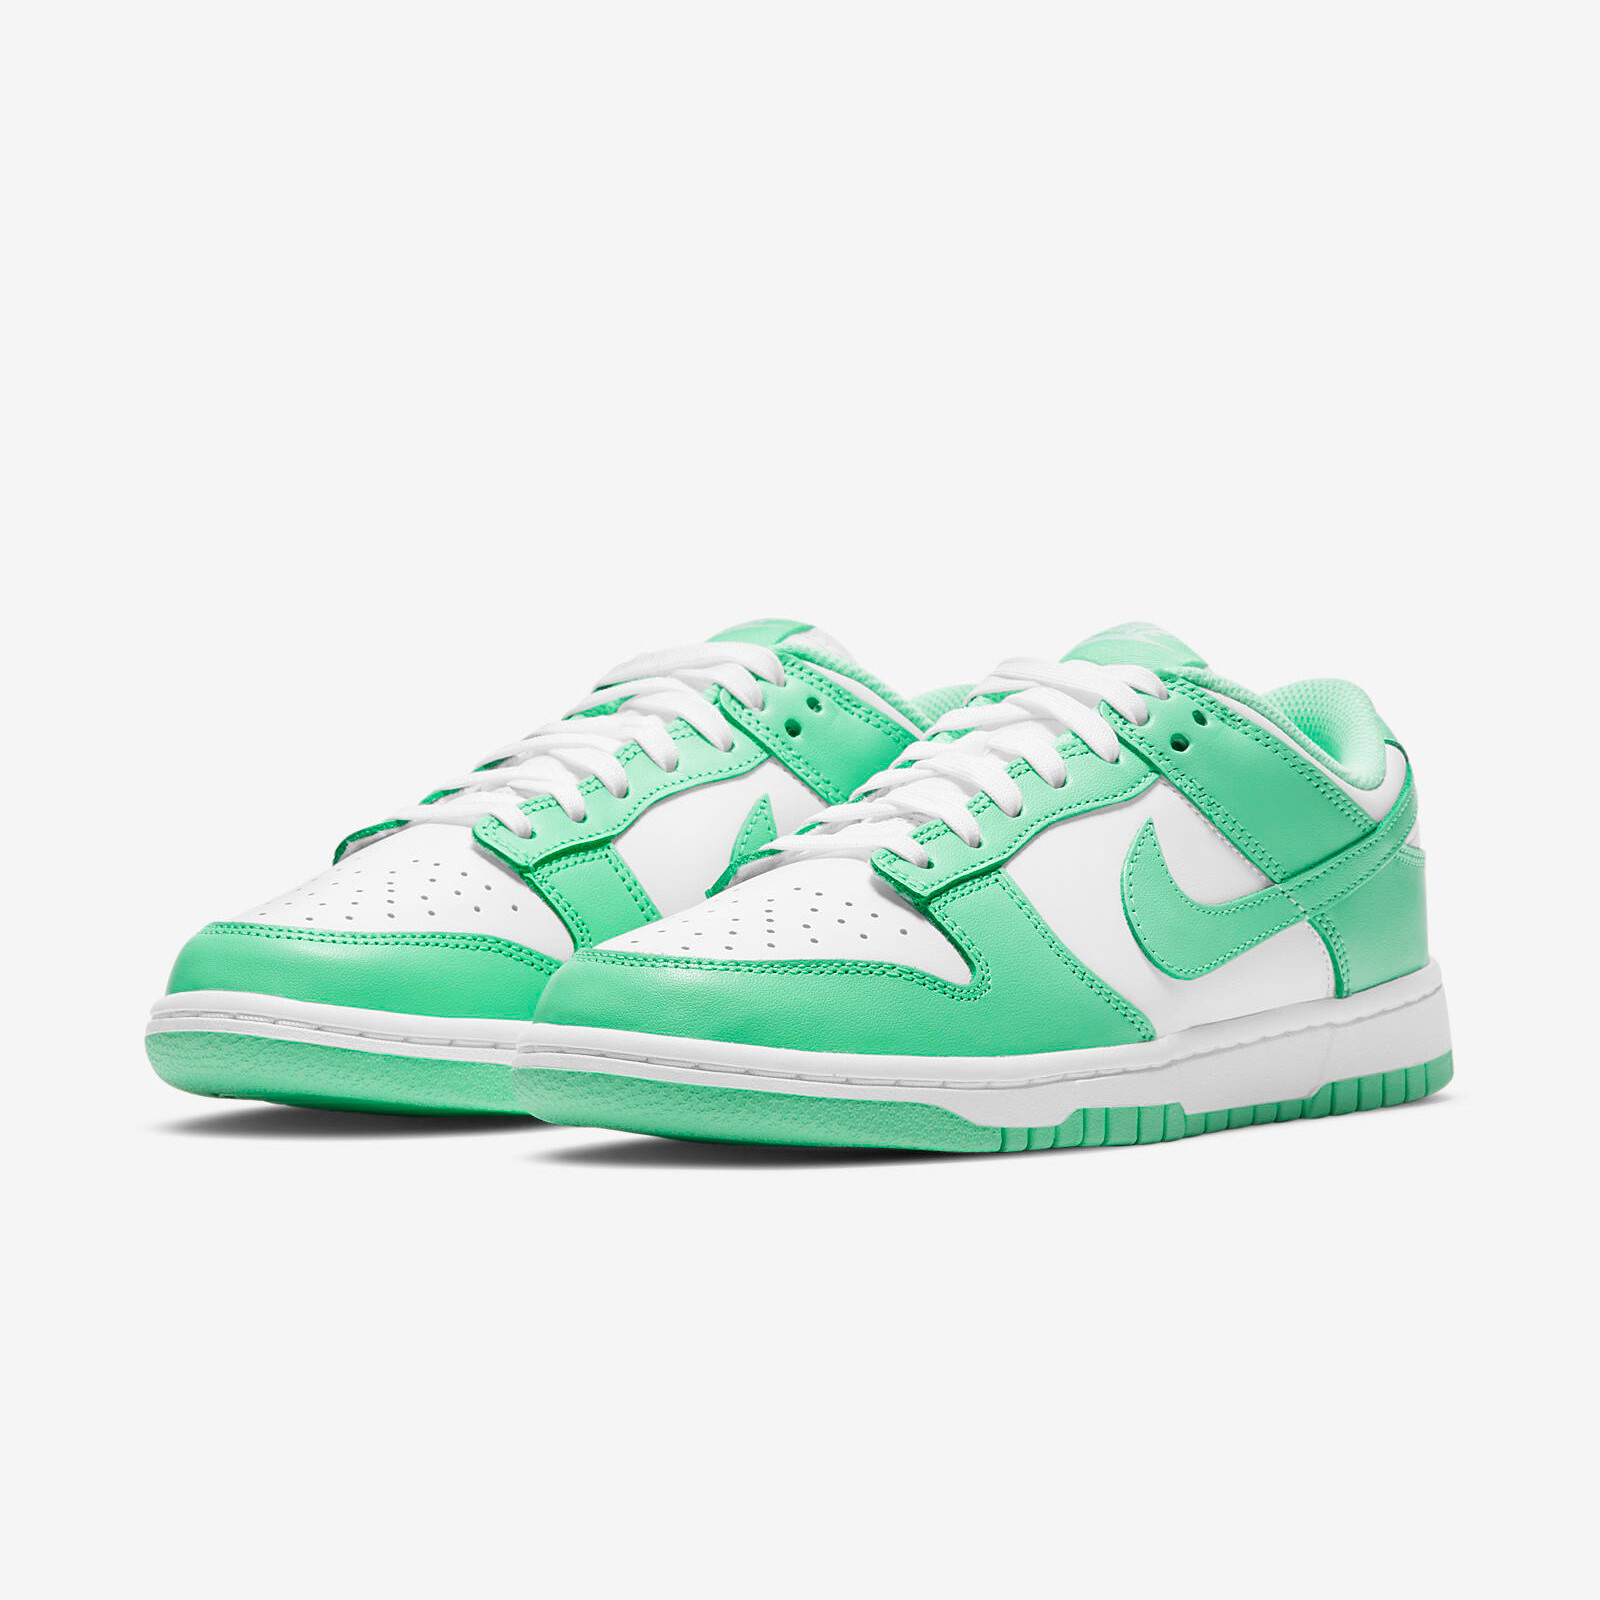 Nike Dunk Low
« Green Glow »